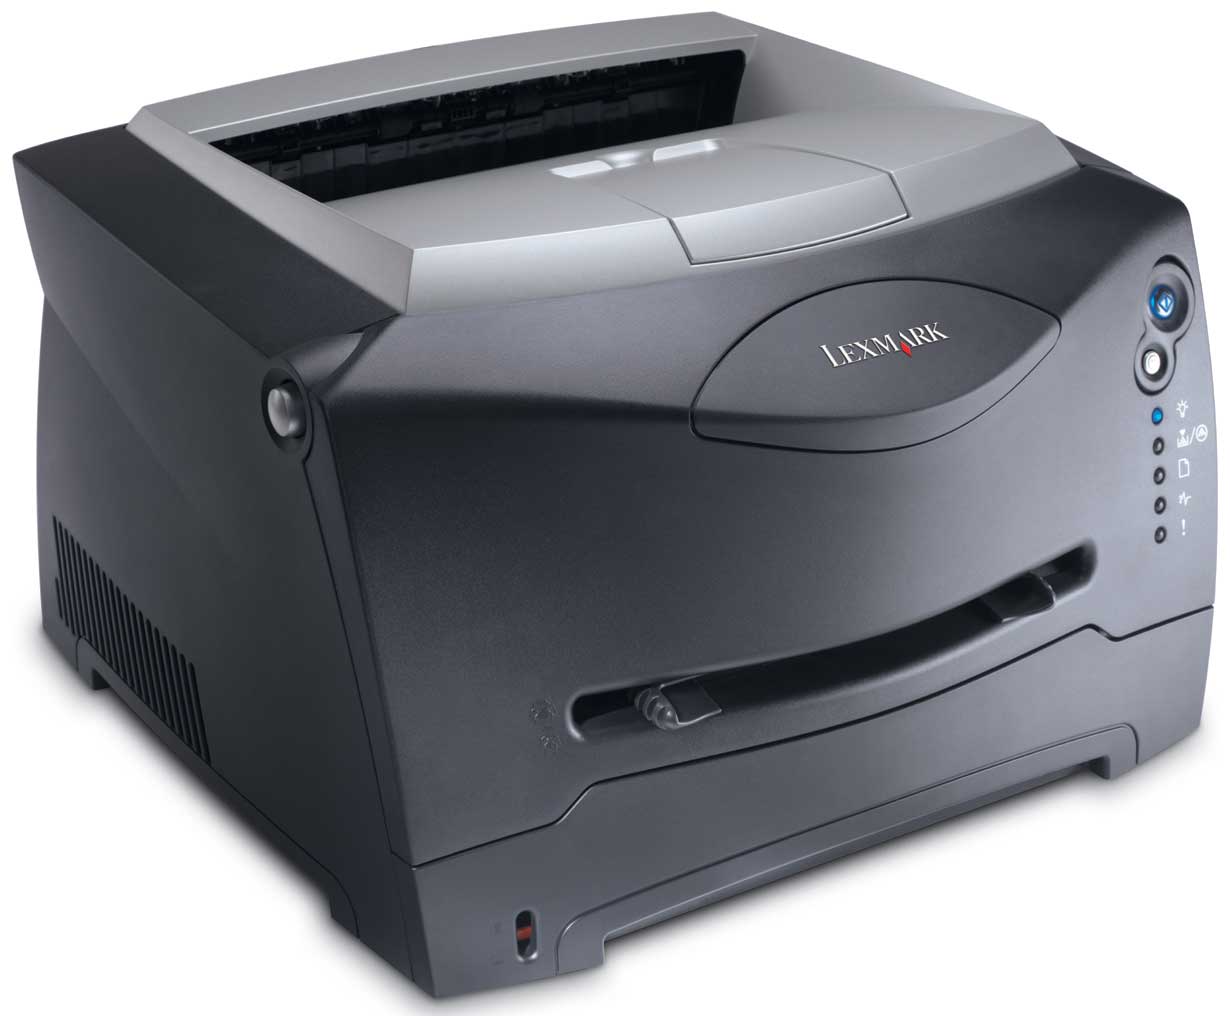 Lexmark E330 printer